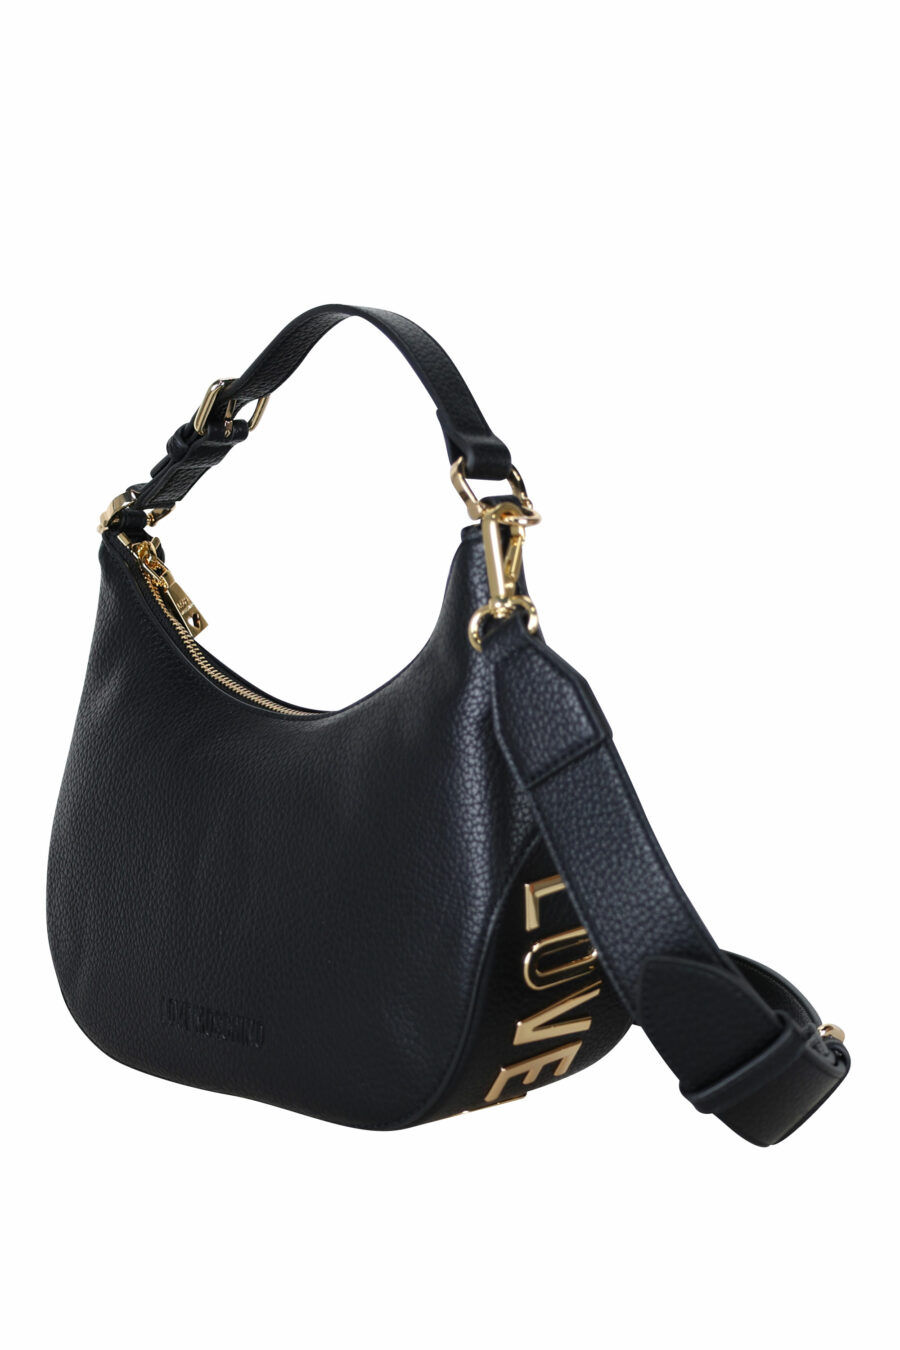 Black leather shoulder bag with monochrome mini logo - 8050142974310